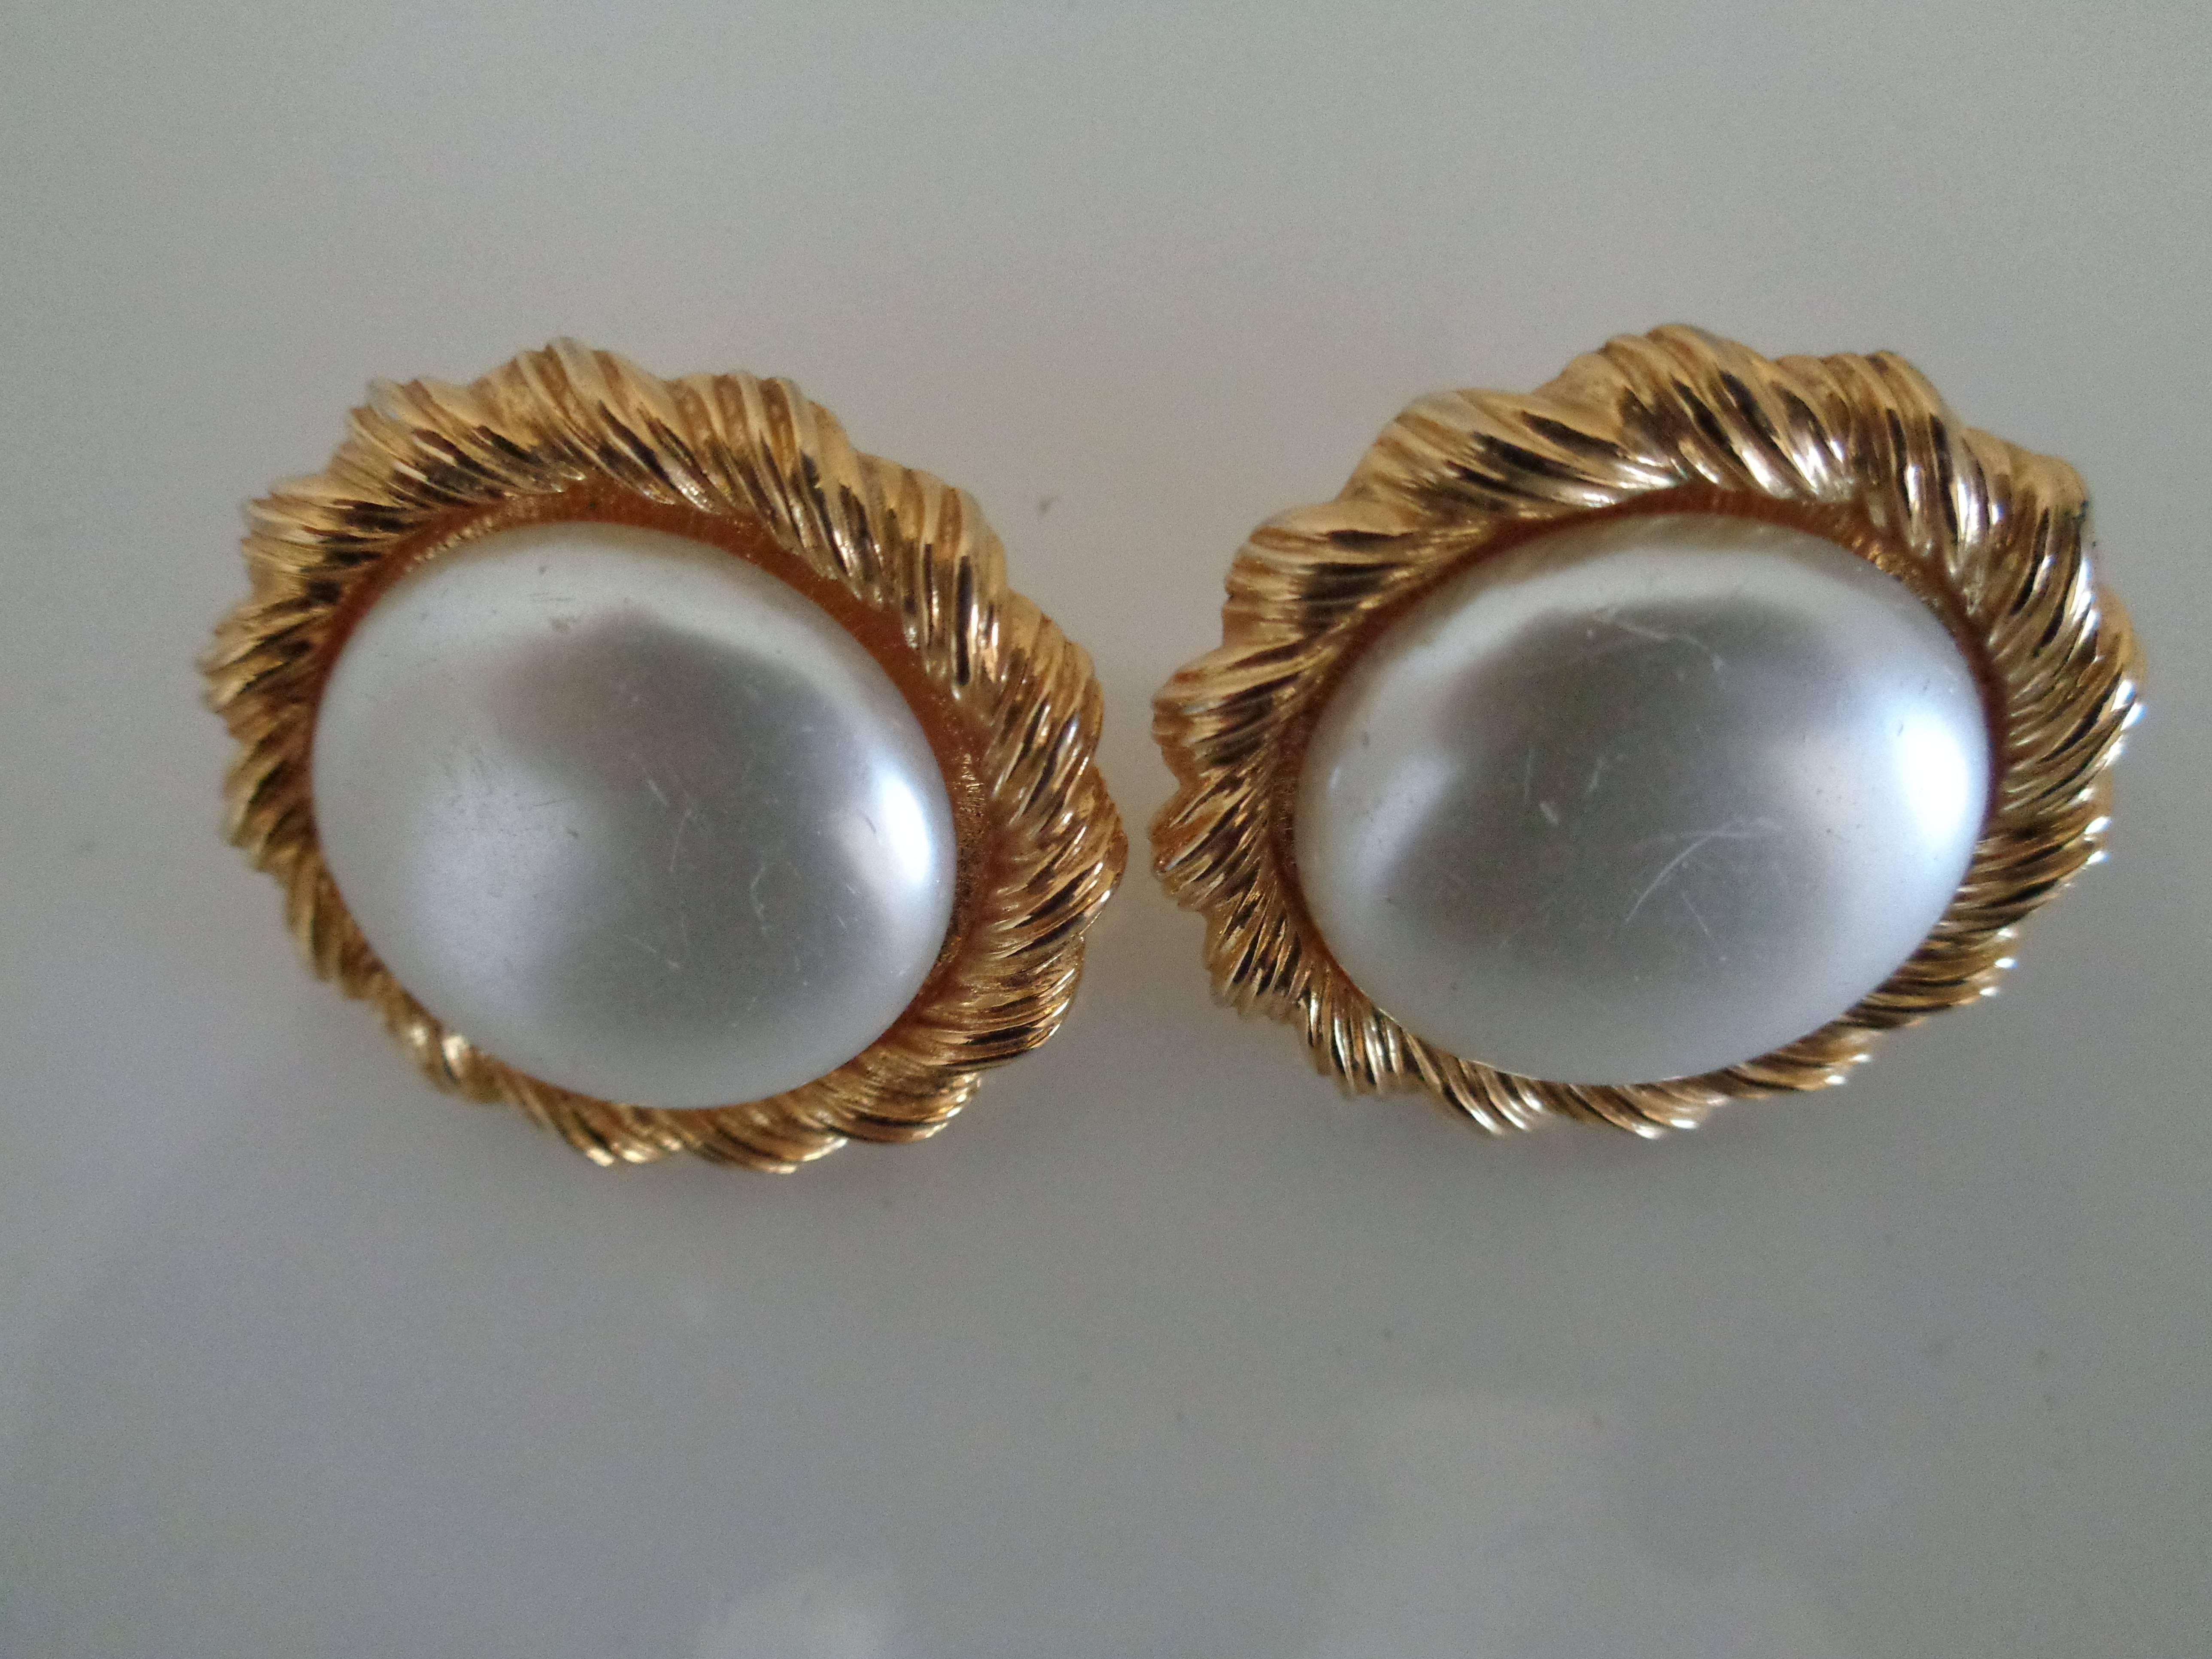 Trifari Gold Tone White Faux Pearls Earrings

measurements 3 x 3 cm